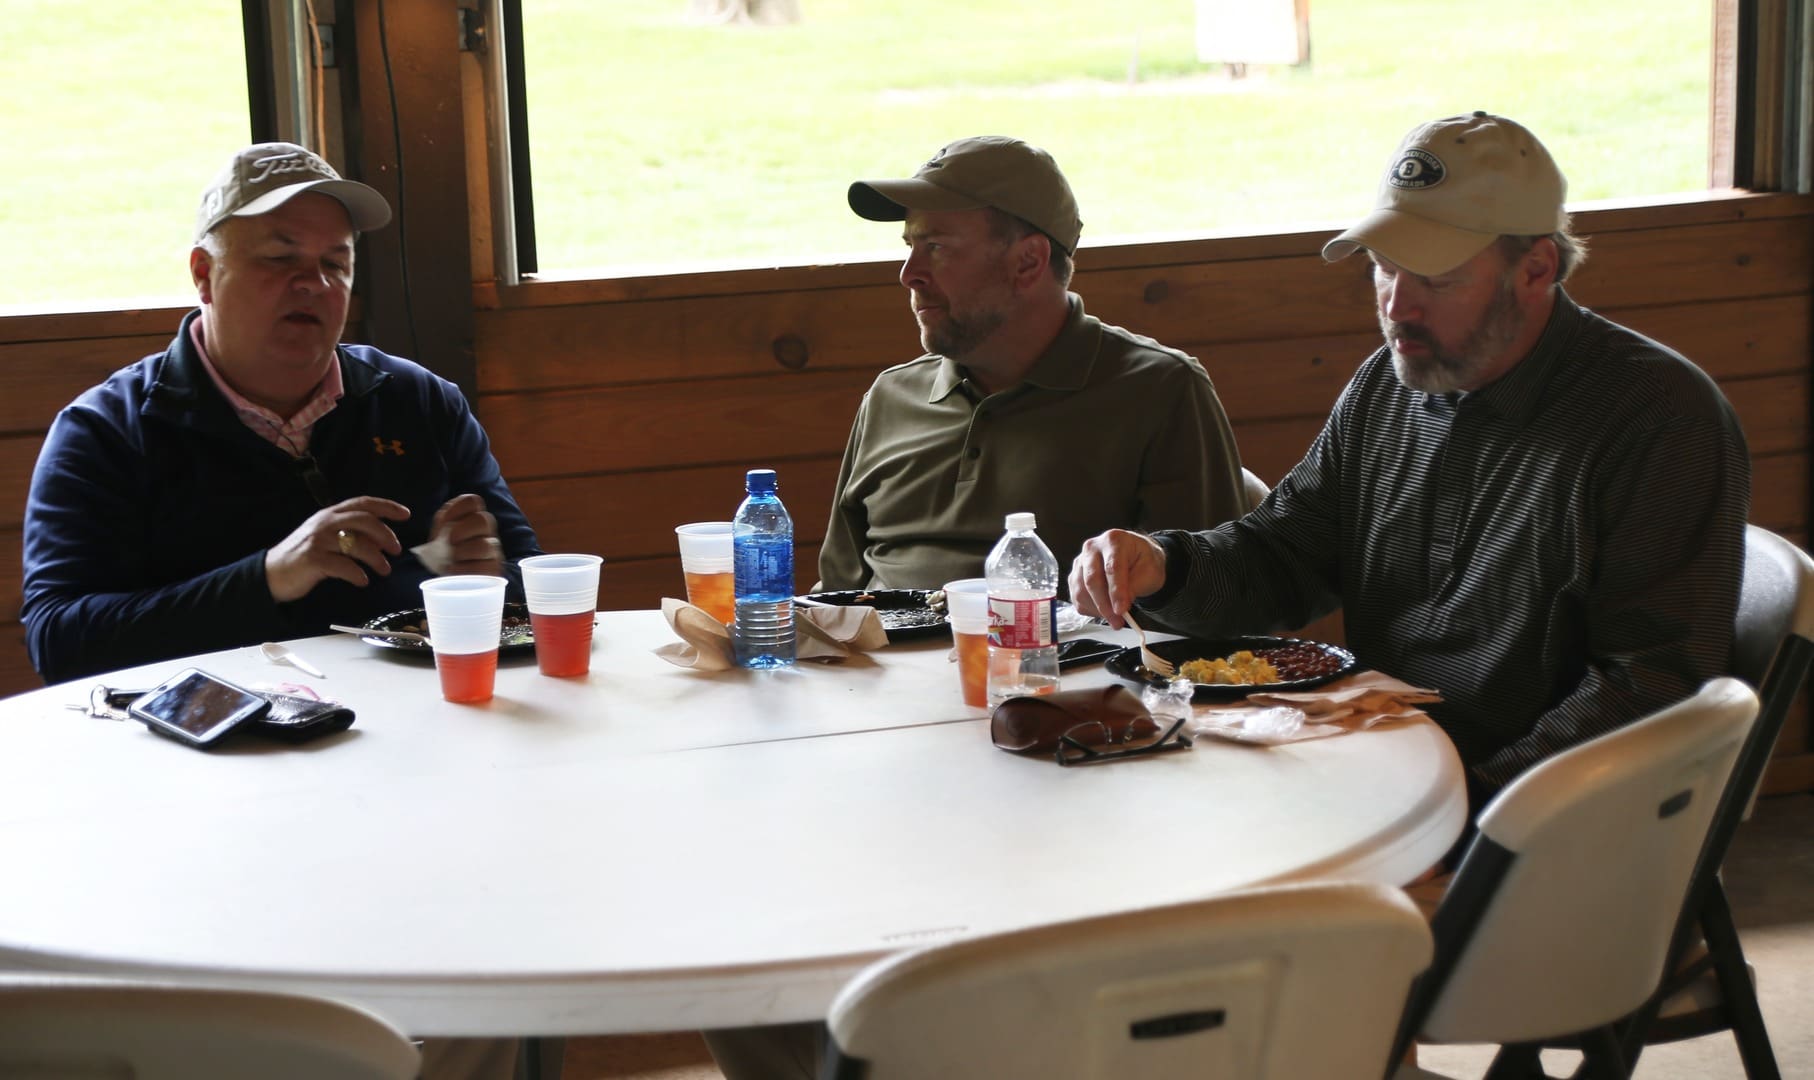 Three men sitting at a table eating food.